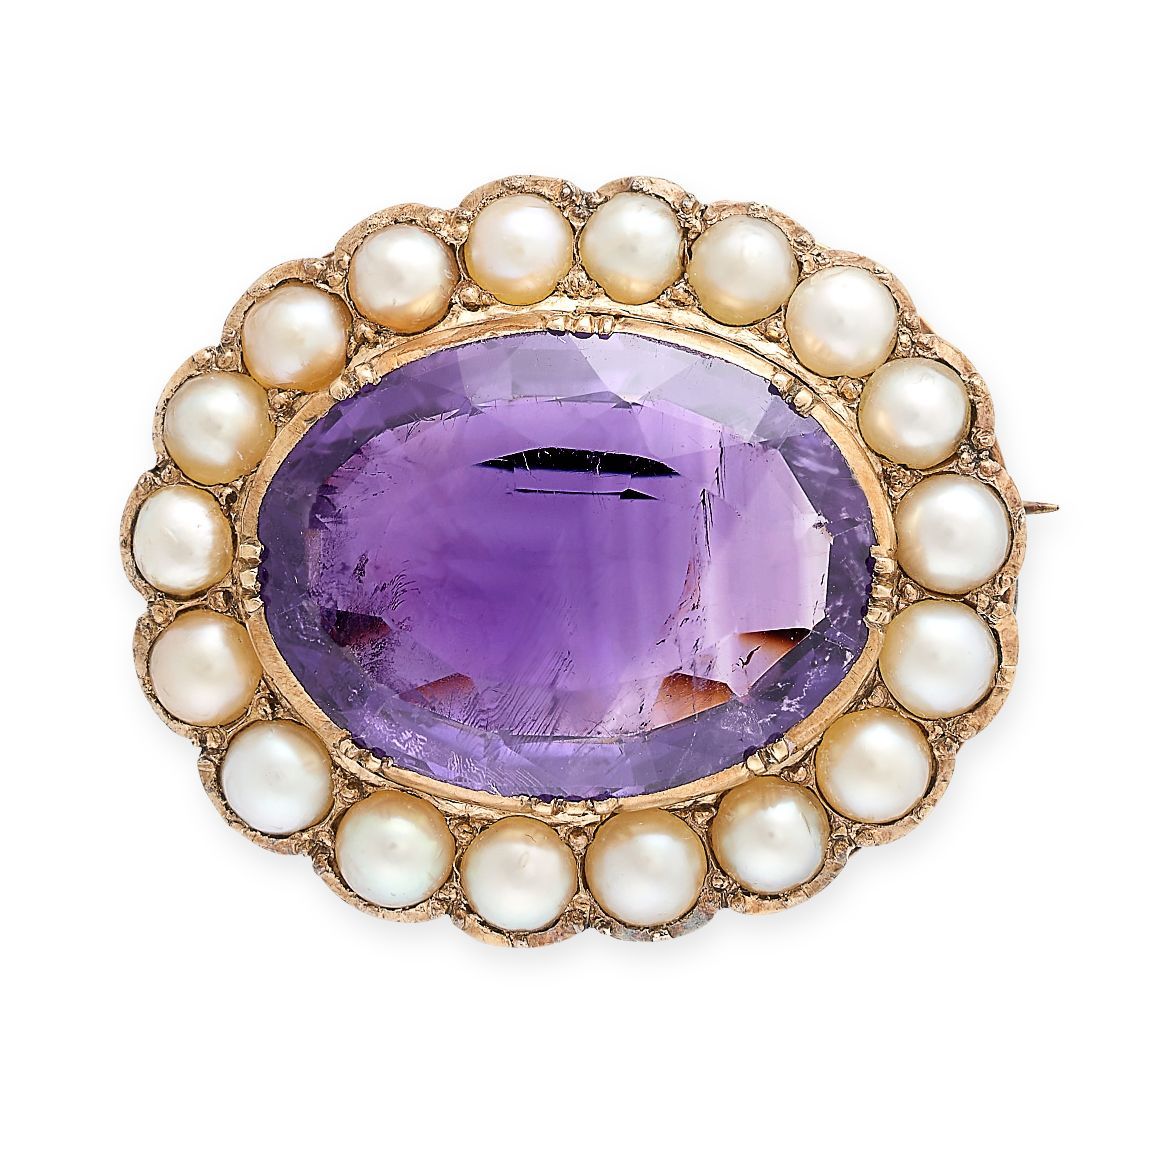 Null ANTIQUE AMETHYST AND PEARL BROOCH, 19TH CENTURY 黄金材质，在珍珠边上镶嵌了一颗椭圆形的紫水晶，无鉴定标&hellip;